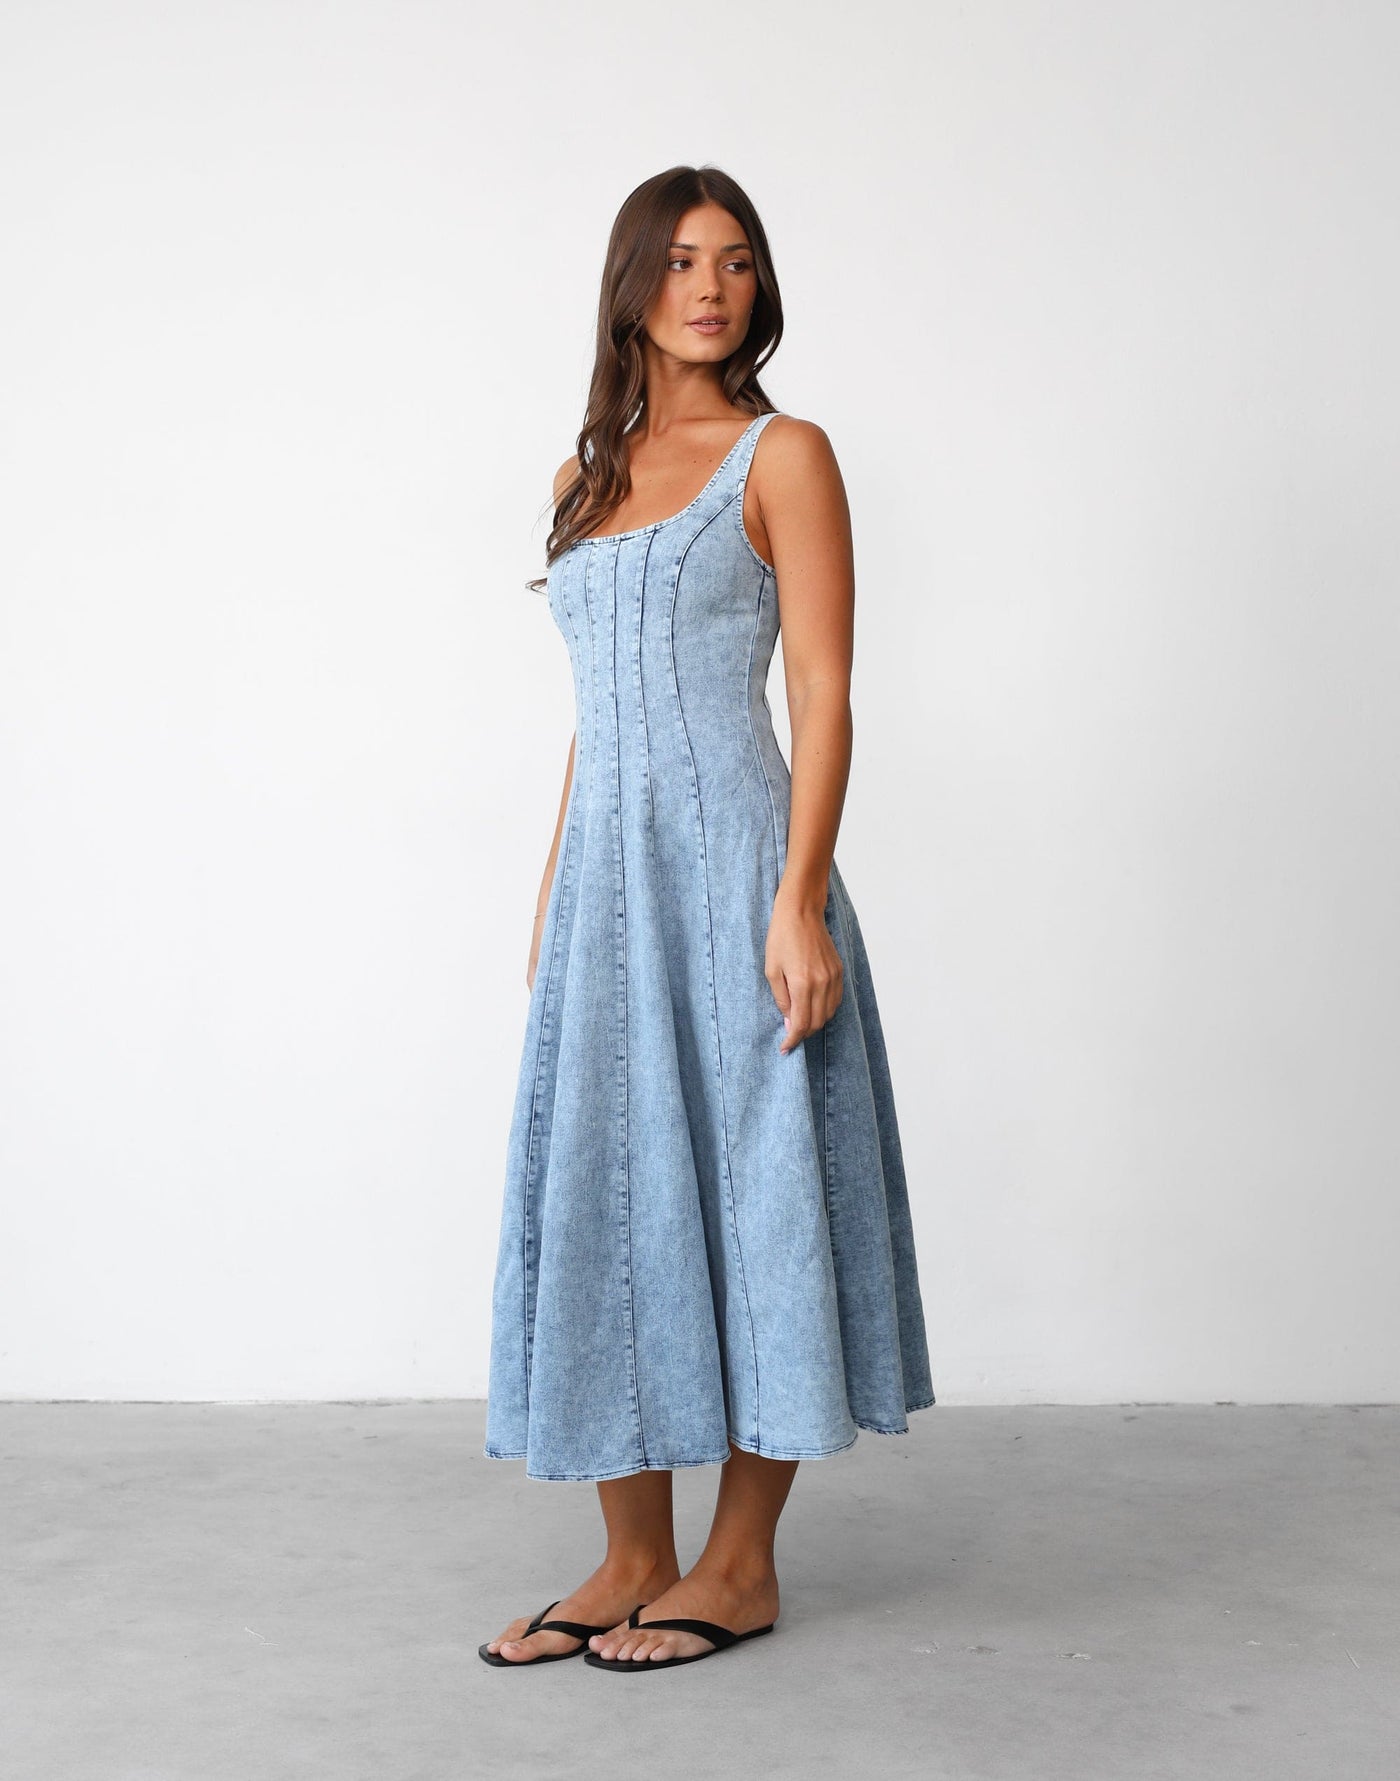 Kella Denim Maxi Dress (Light Denim) - Stretch Denim A-line Dress - Women's Dress - Charcoal Clothing